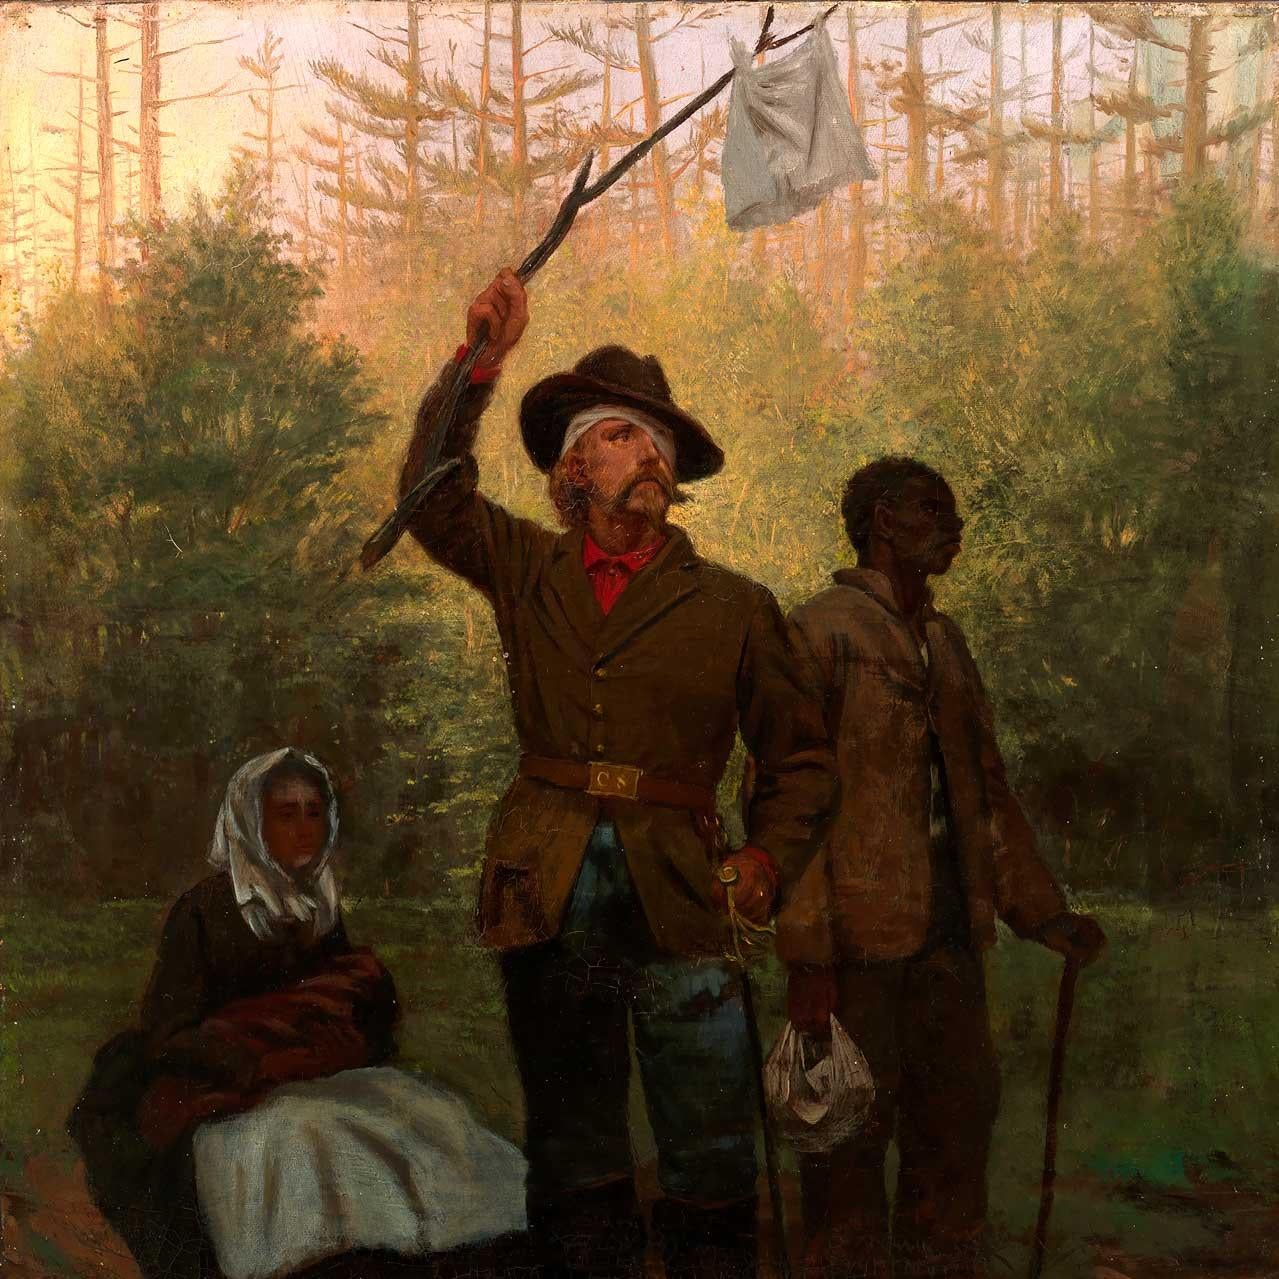 Julian Scott's Surrender of a Confederate Soldier